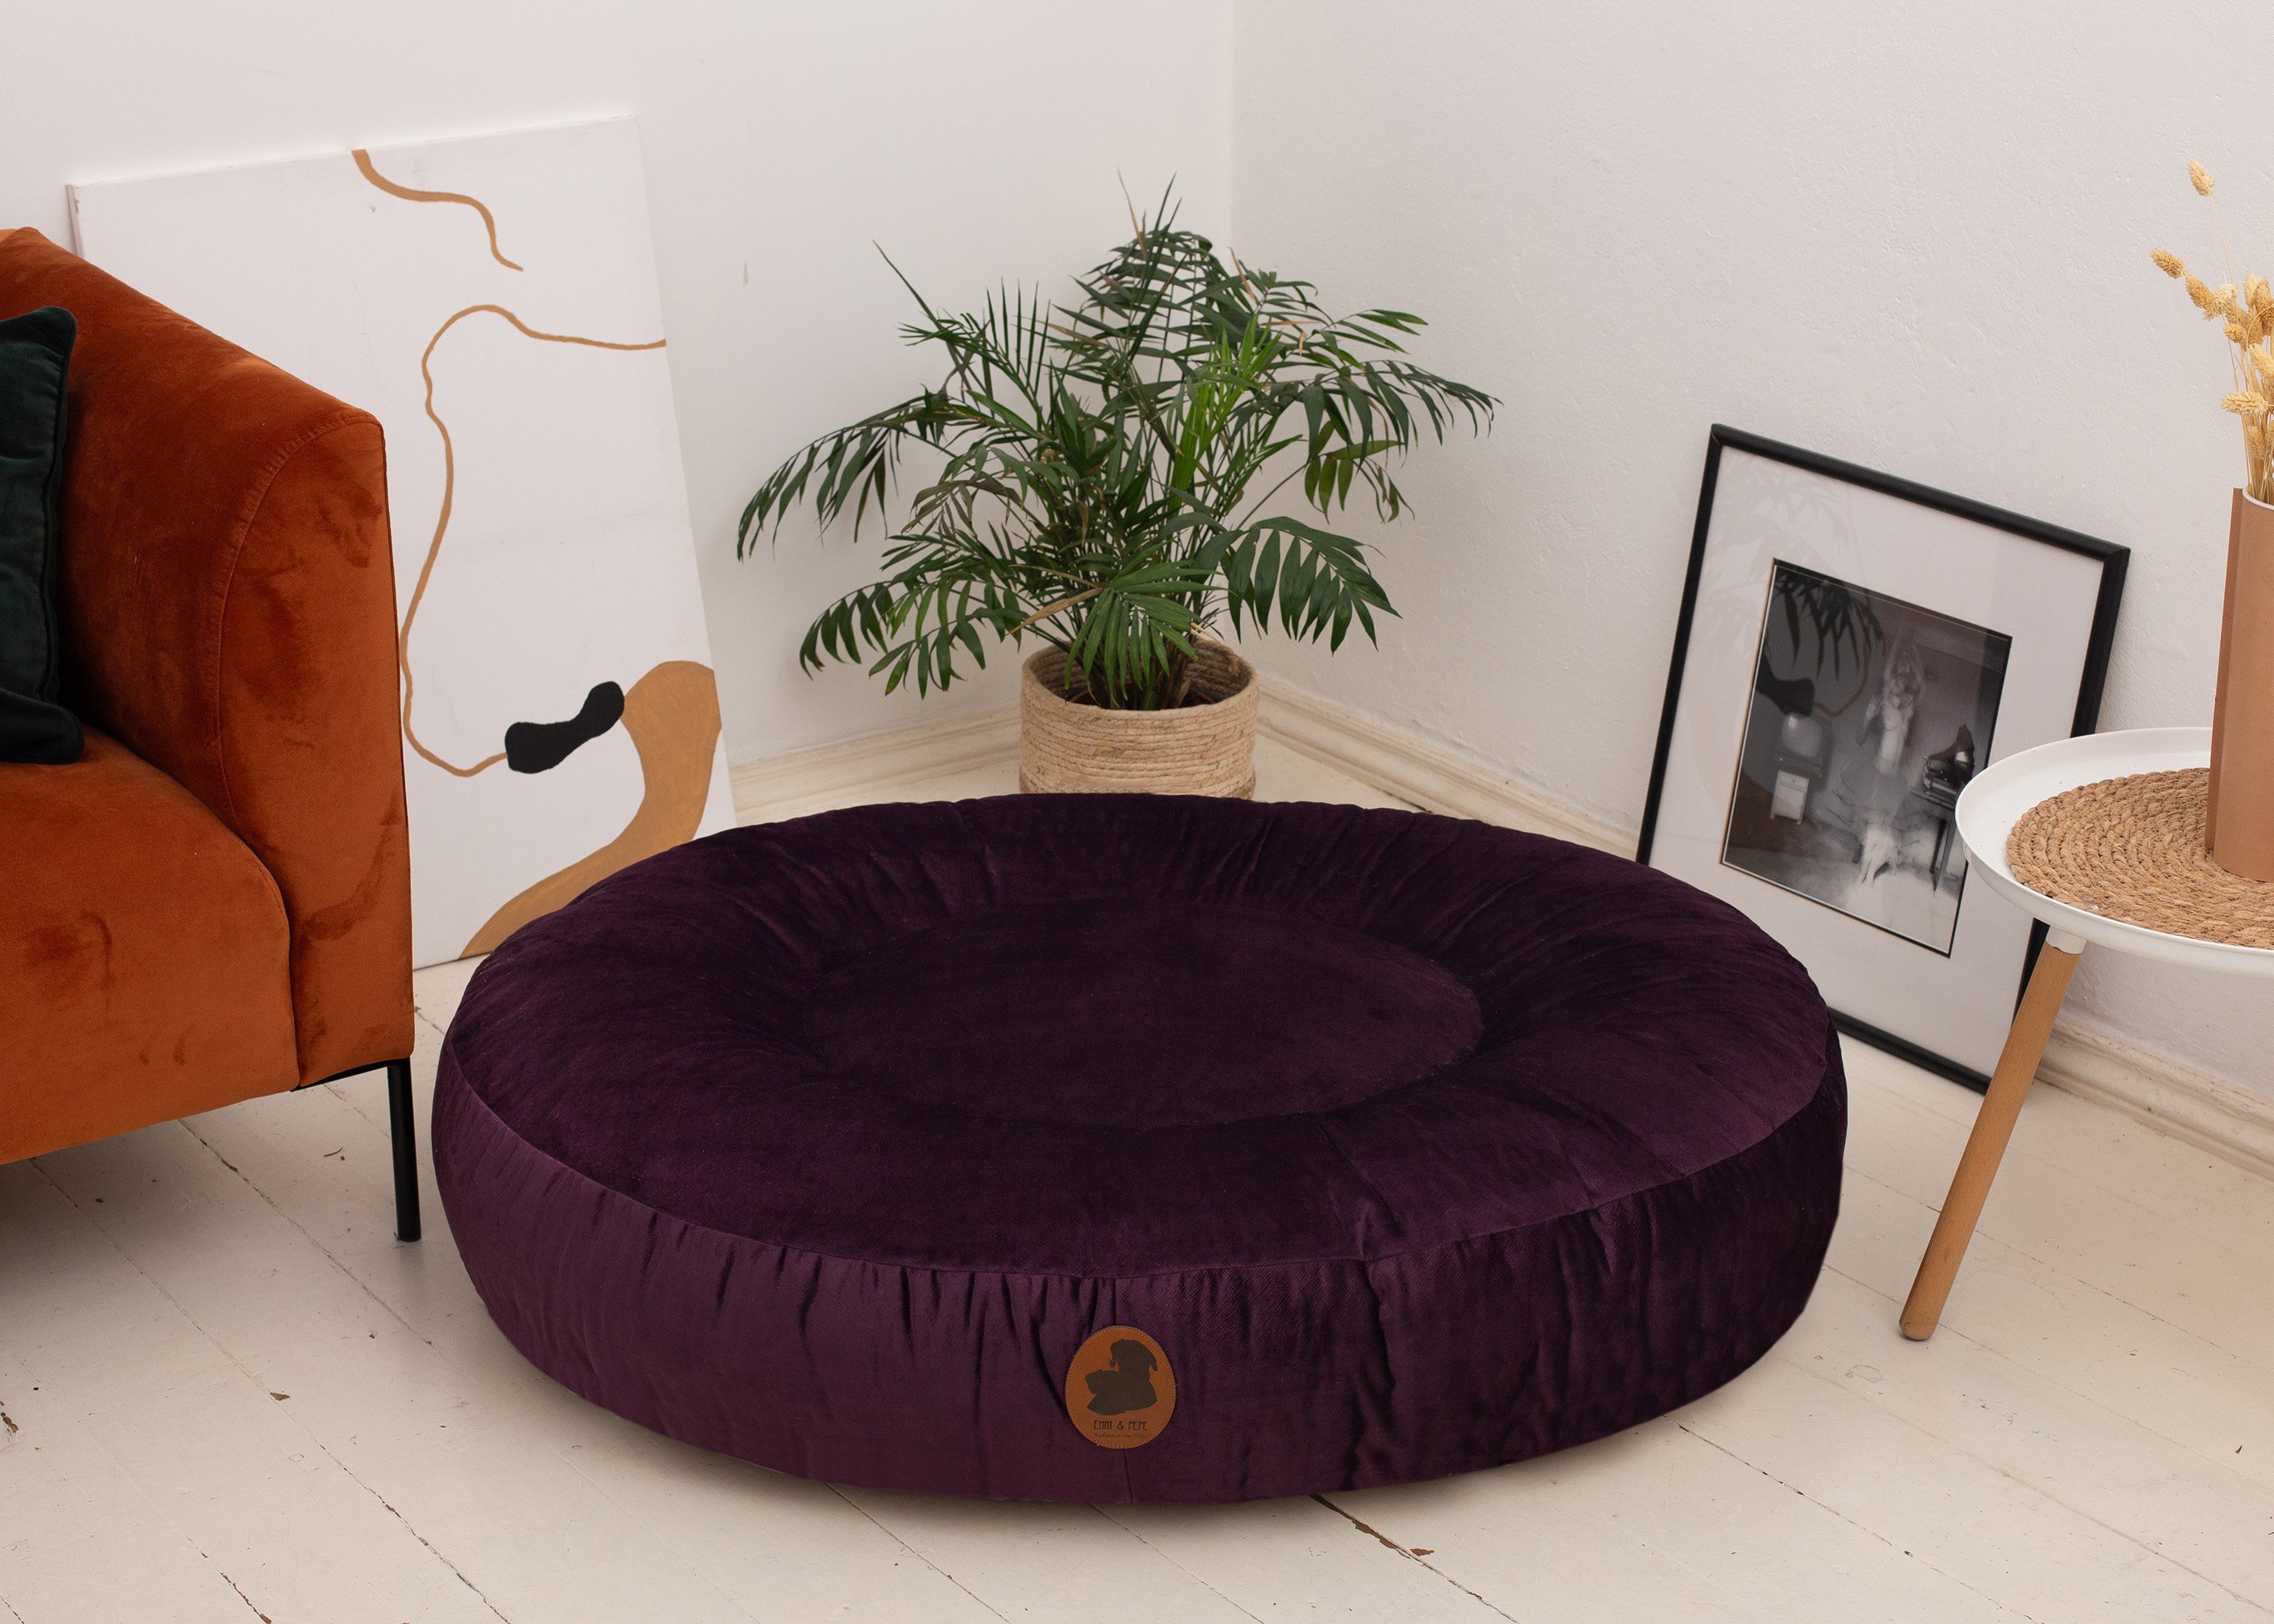 Wau-Bed Pets Friendly Purple Oval XL (140x120cm)